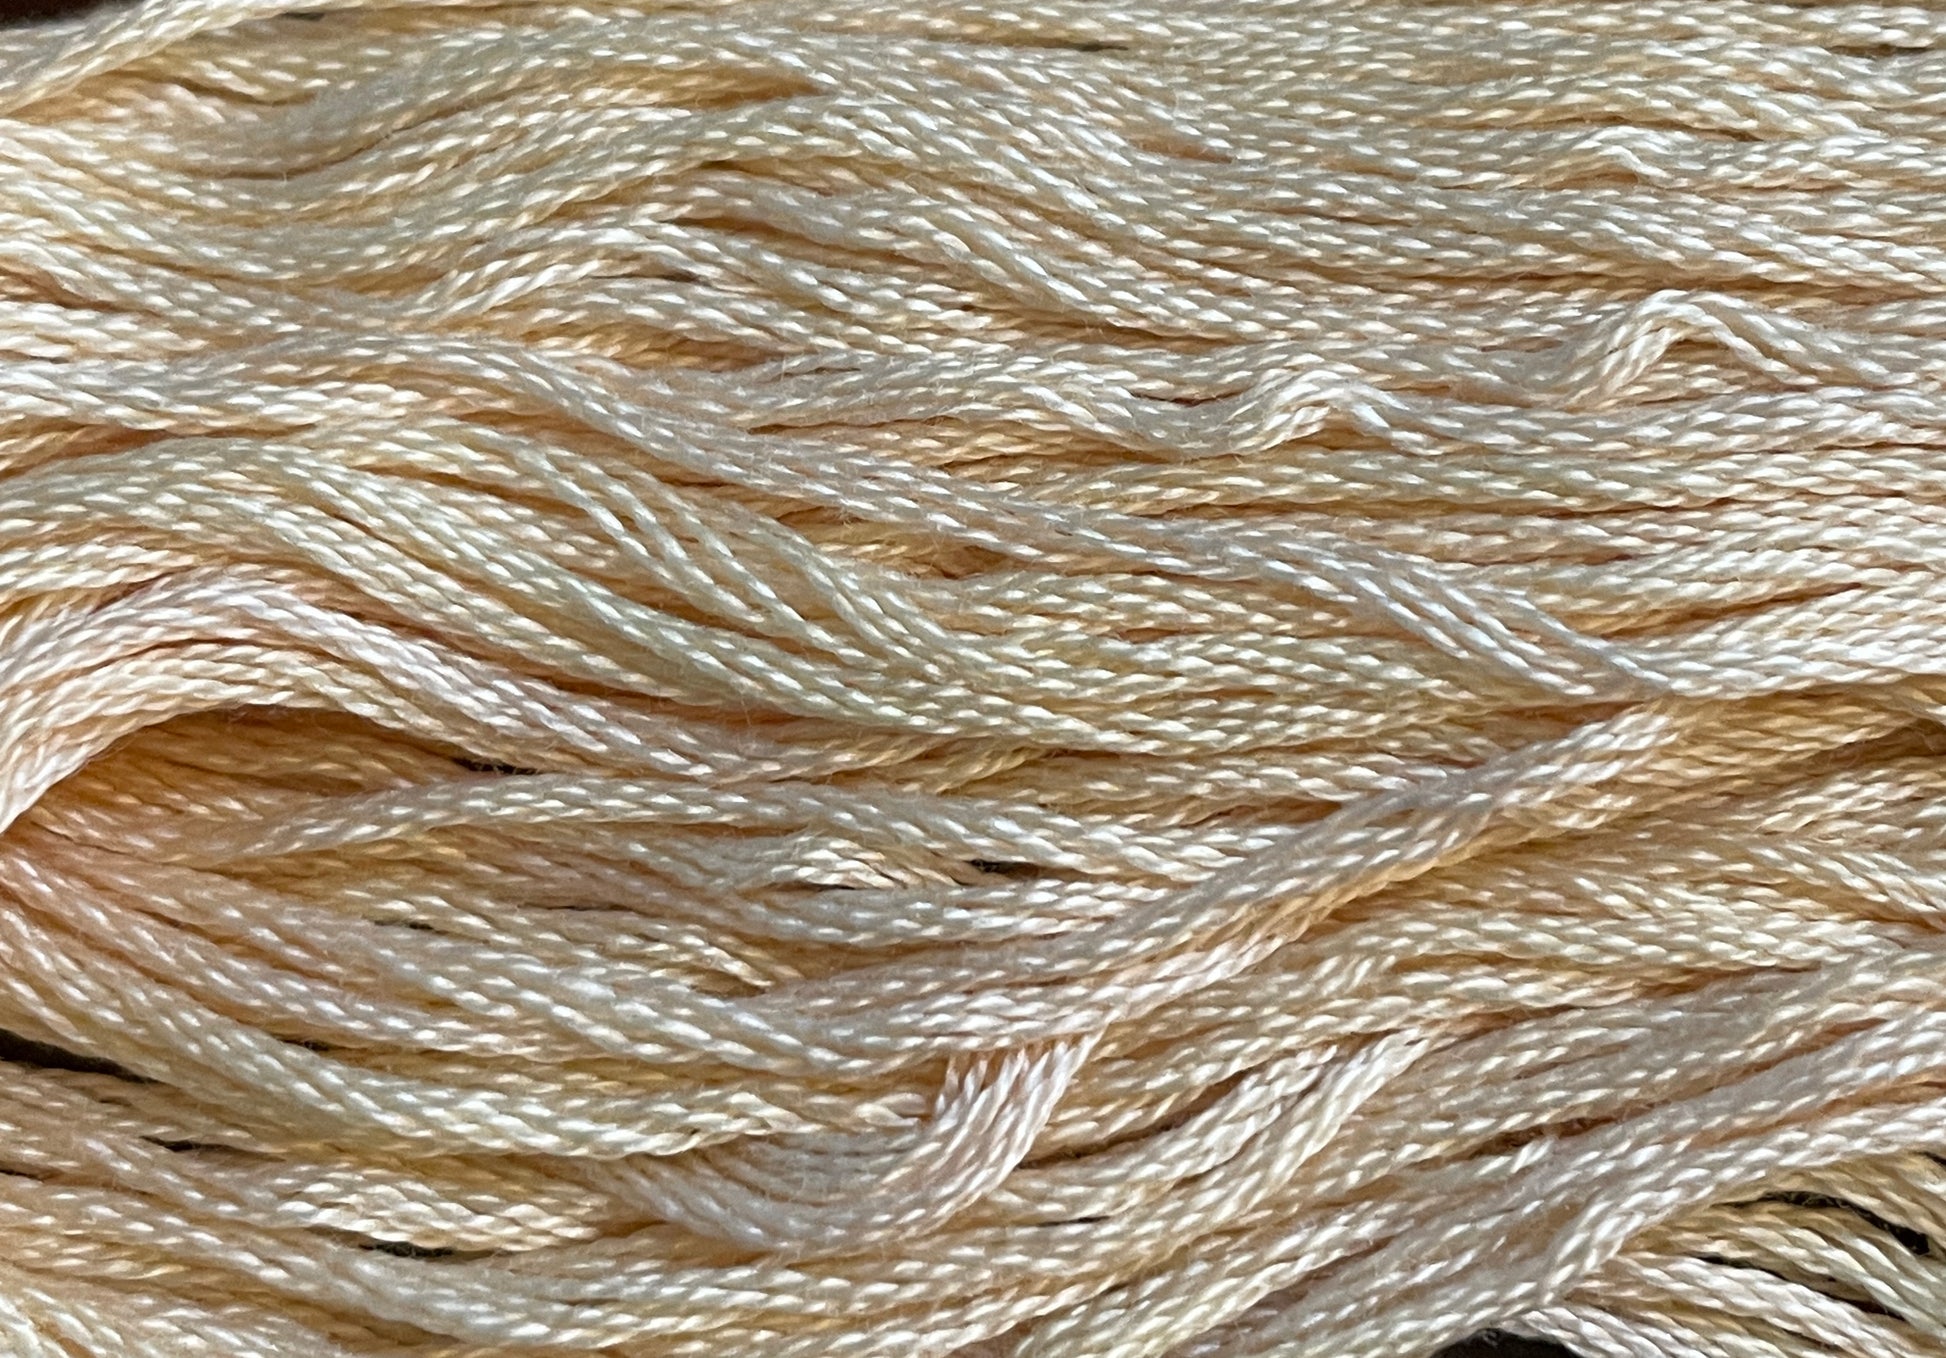 Apricot Blush - Gentle Arts Cotton Thread - 5 yard Skein - Cross Stitch Floss, Thread & Floss, Thread & Floss, The Crafty Grimalkin - A Cross Stitch Store